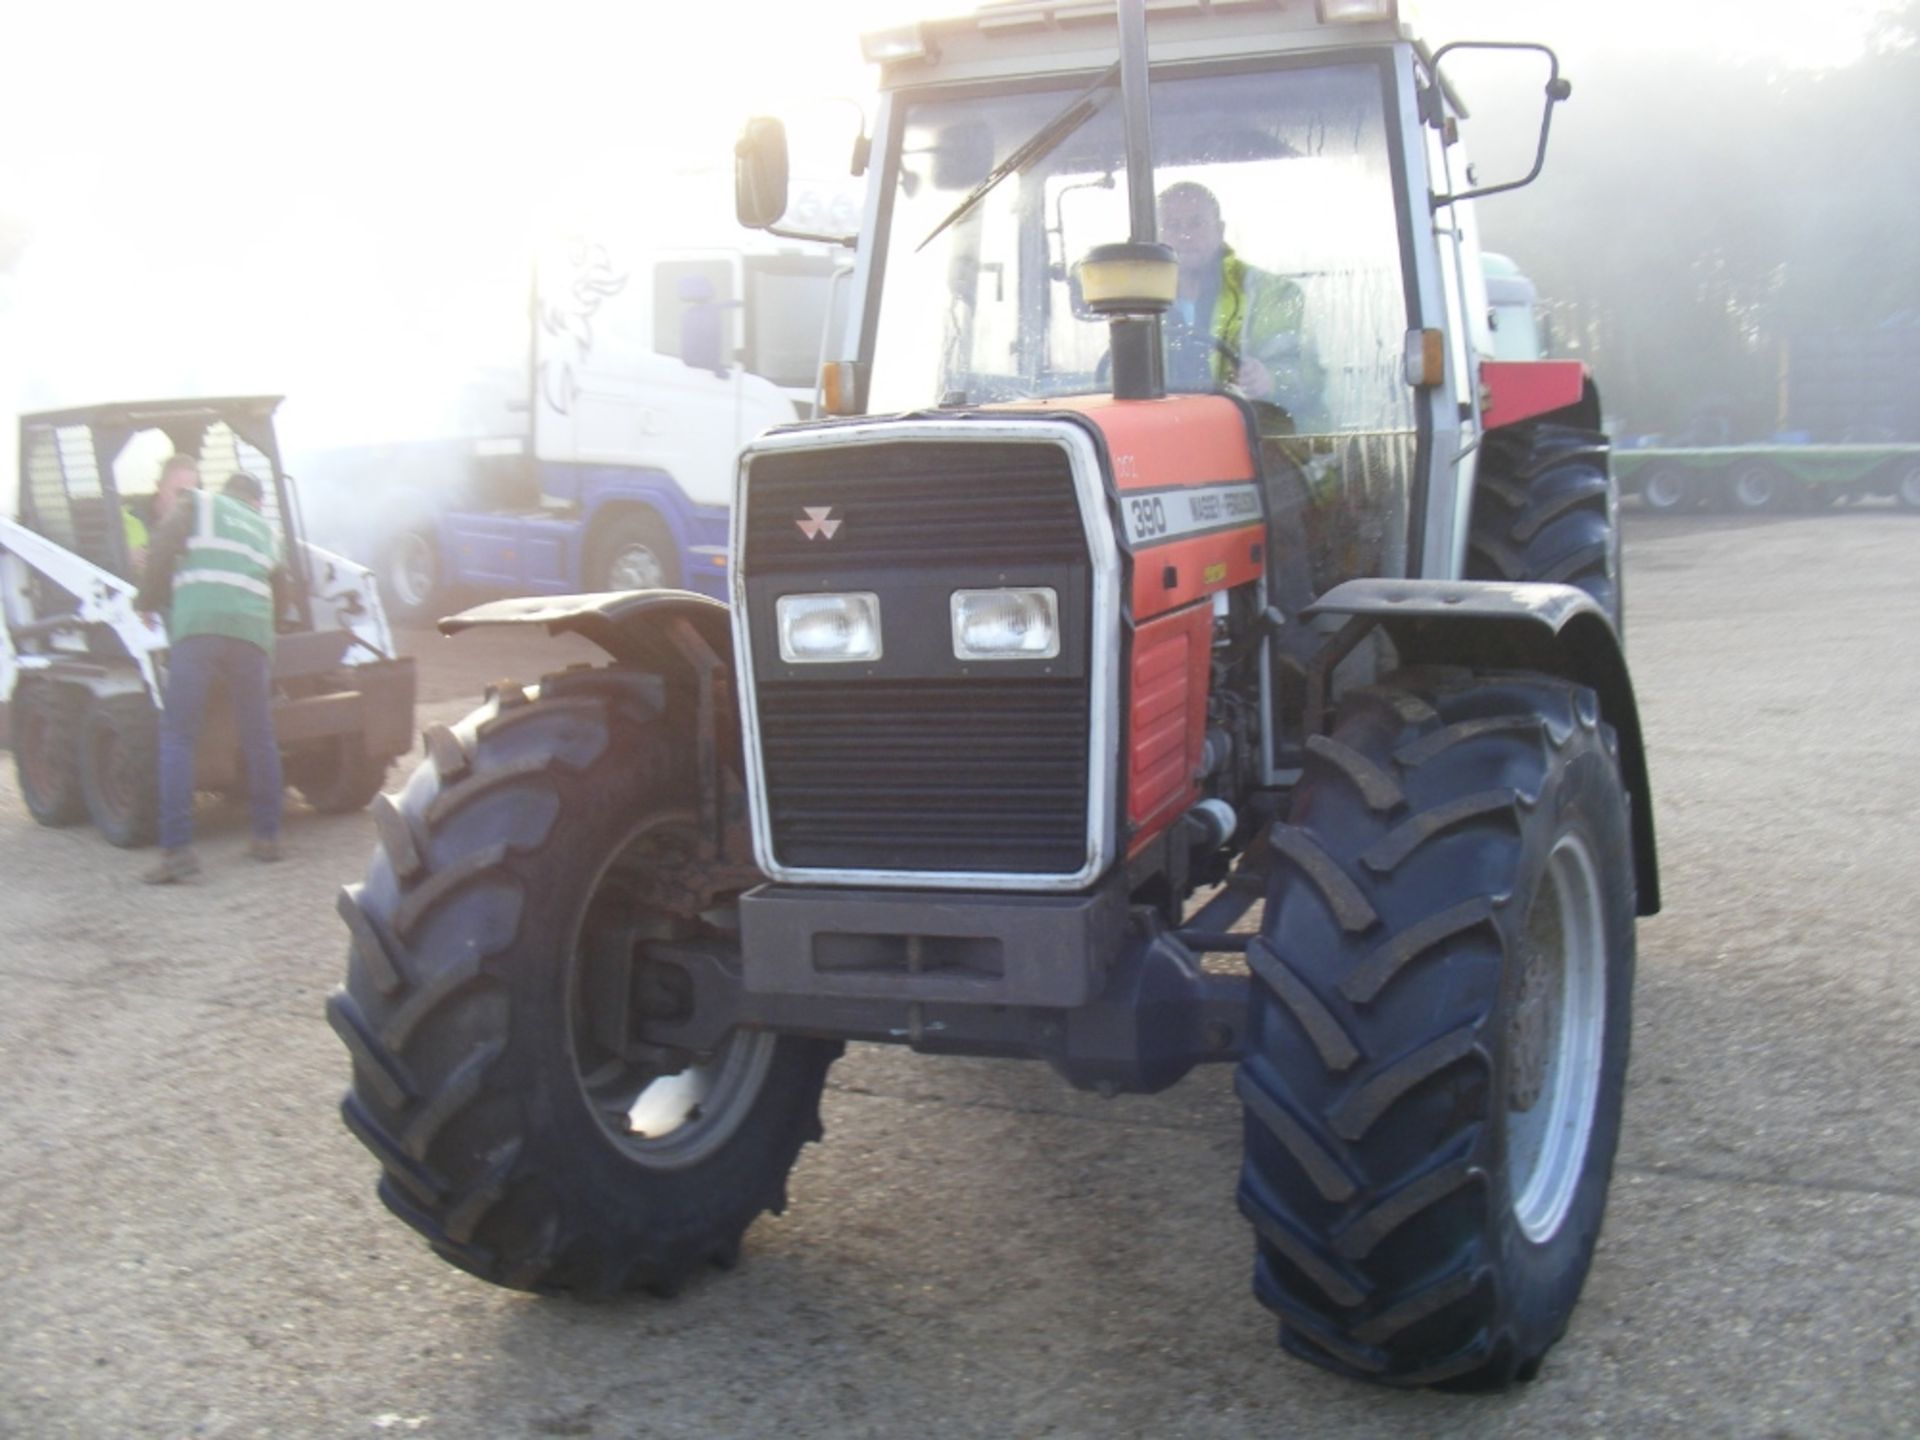 Massey Ferguson 390 4wd Tractor 3274 Hrs. Reg. No. H717 KCS - Image 2 of 4